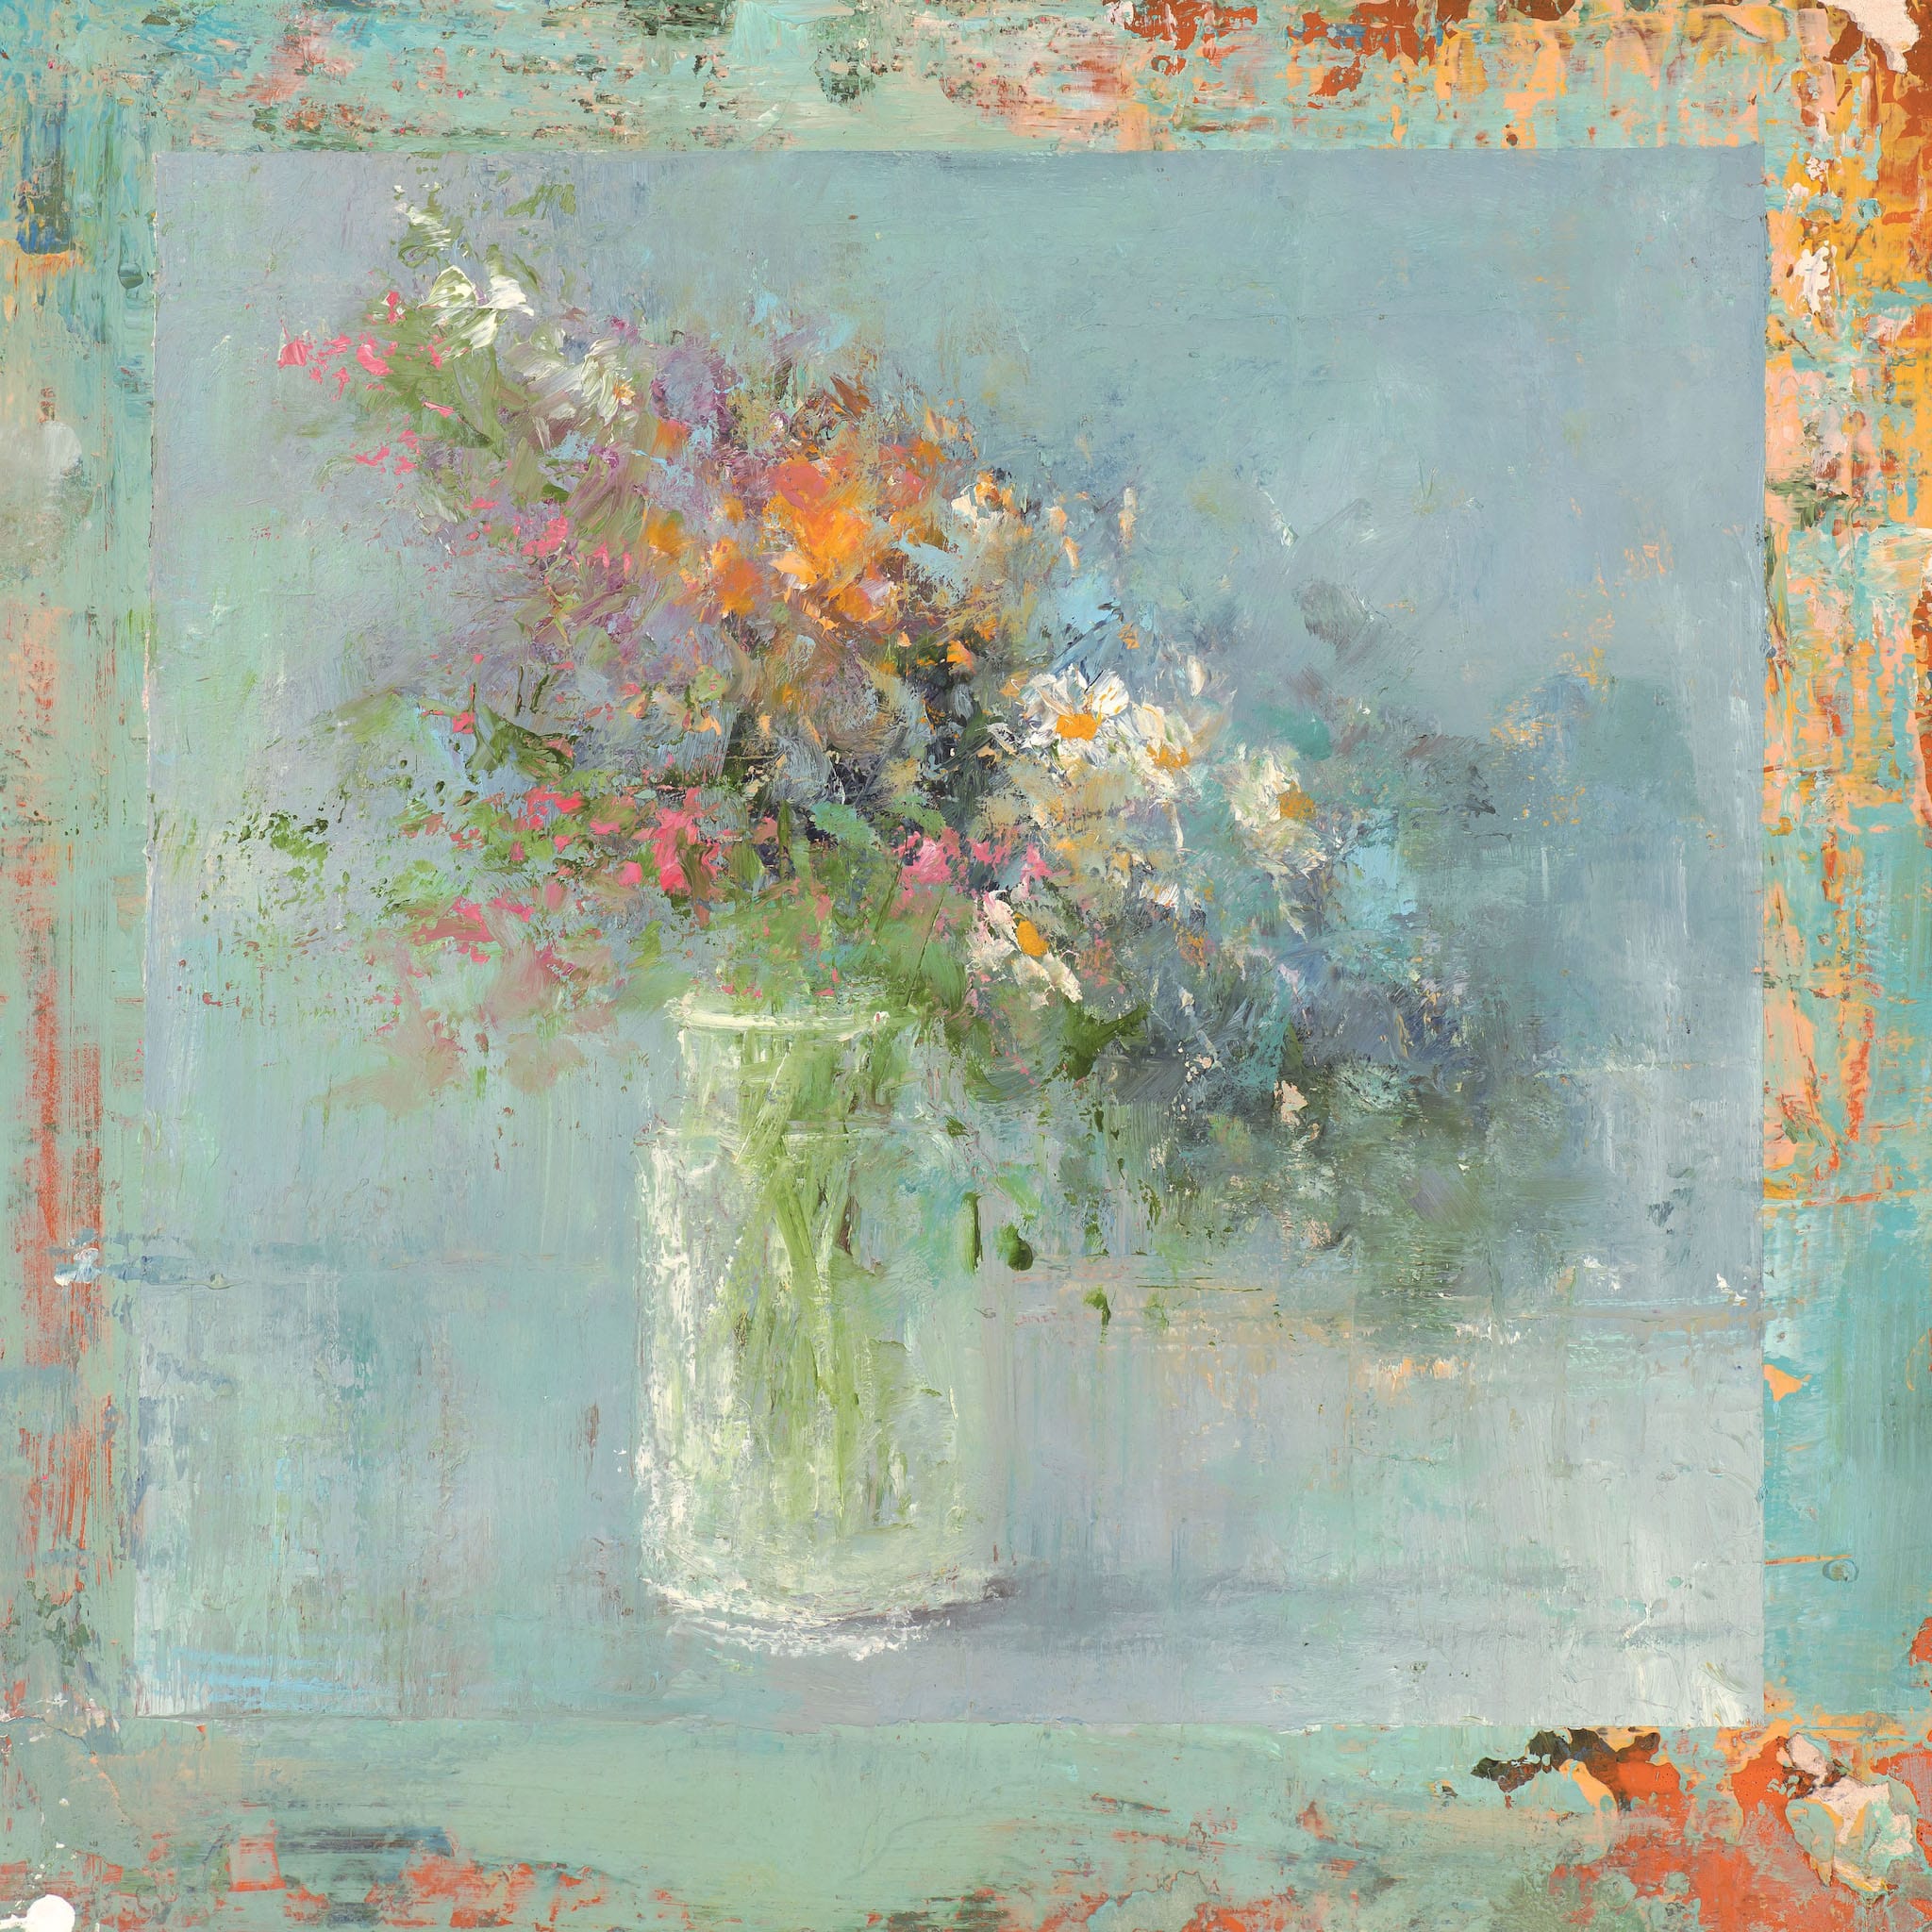 Still life oil painting of summer flowers in a vase by artist Amanda Hoskin